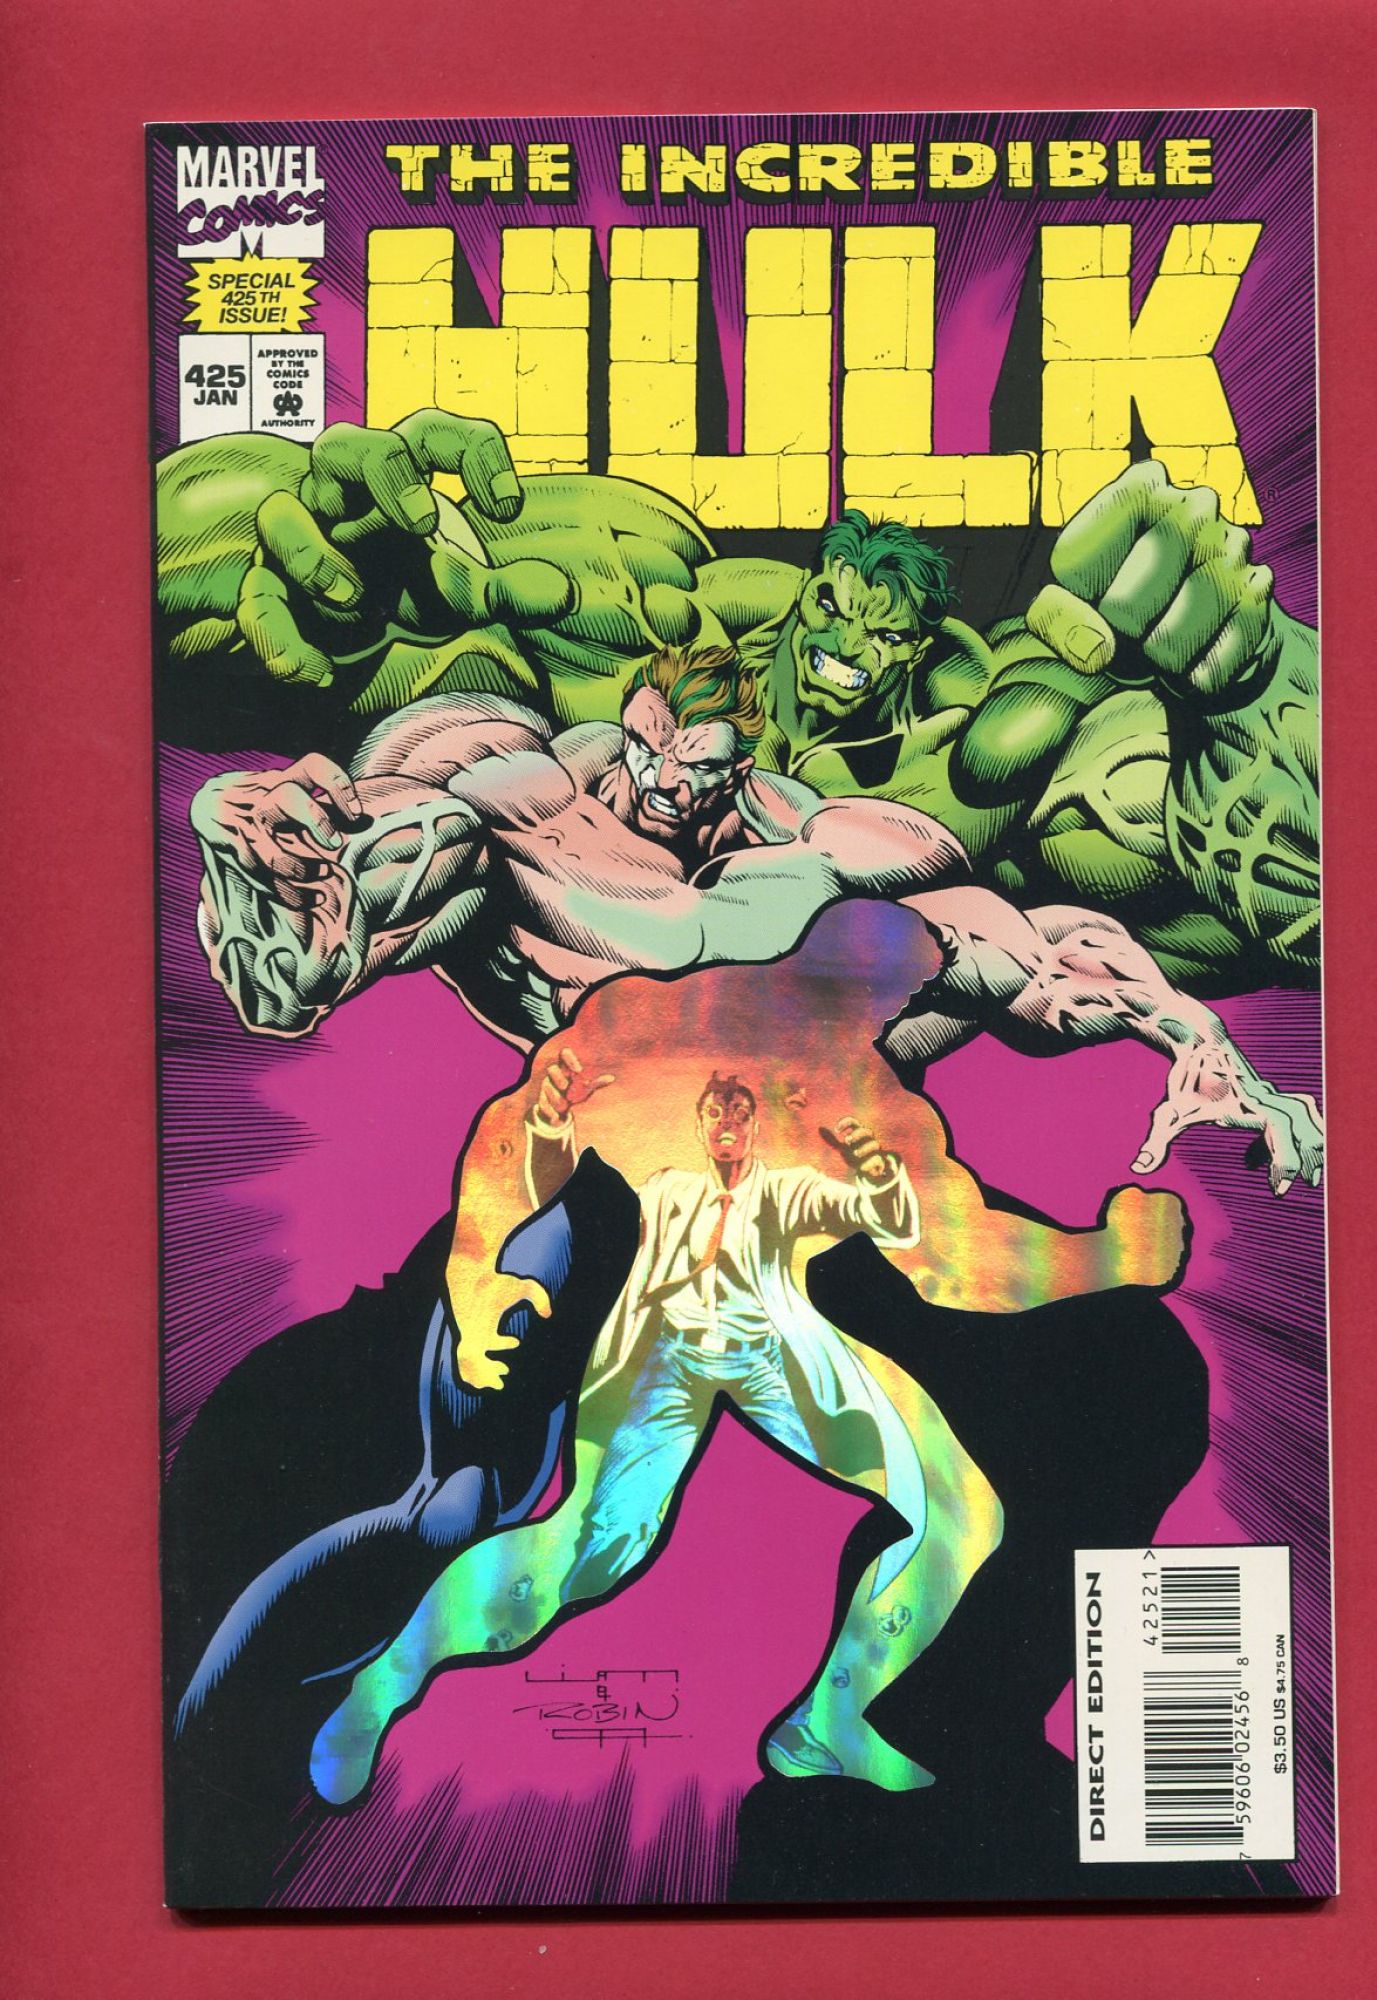 Incredible Hulk #425, Jan 1995, 8.5 VF+